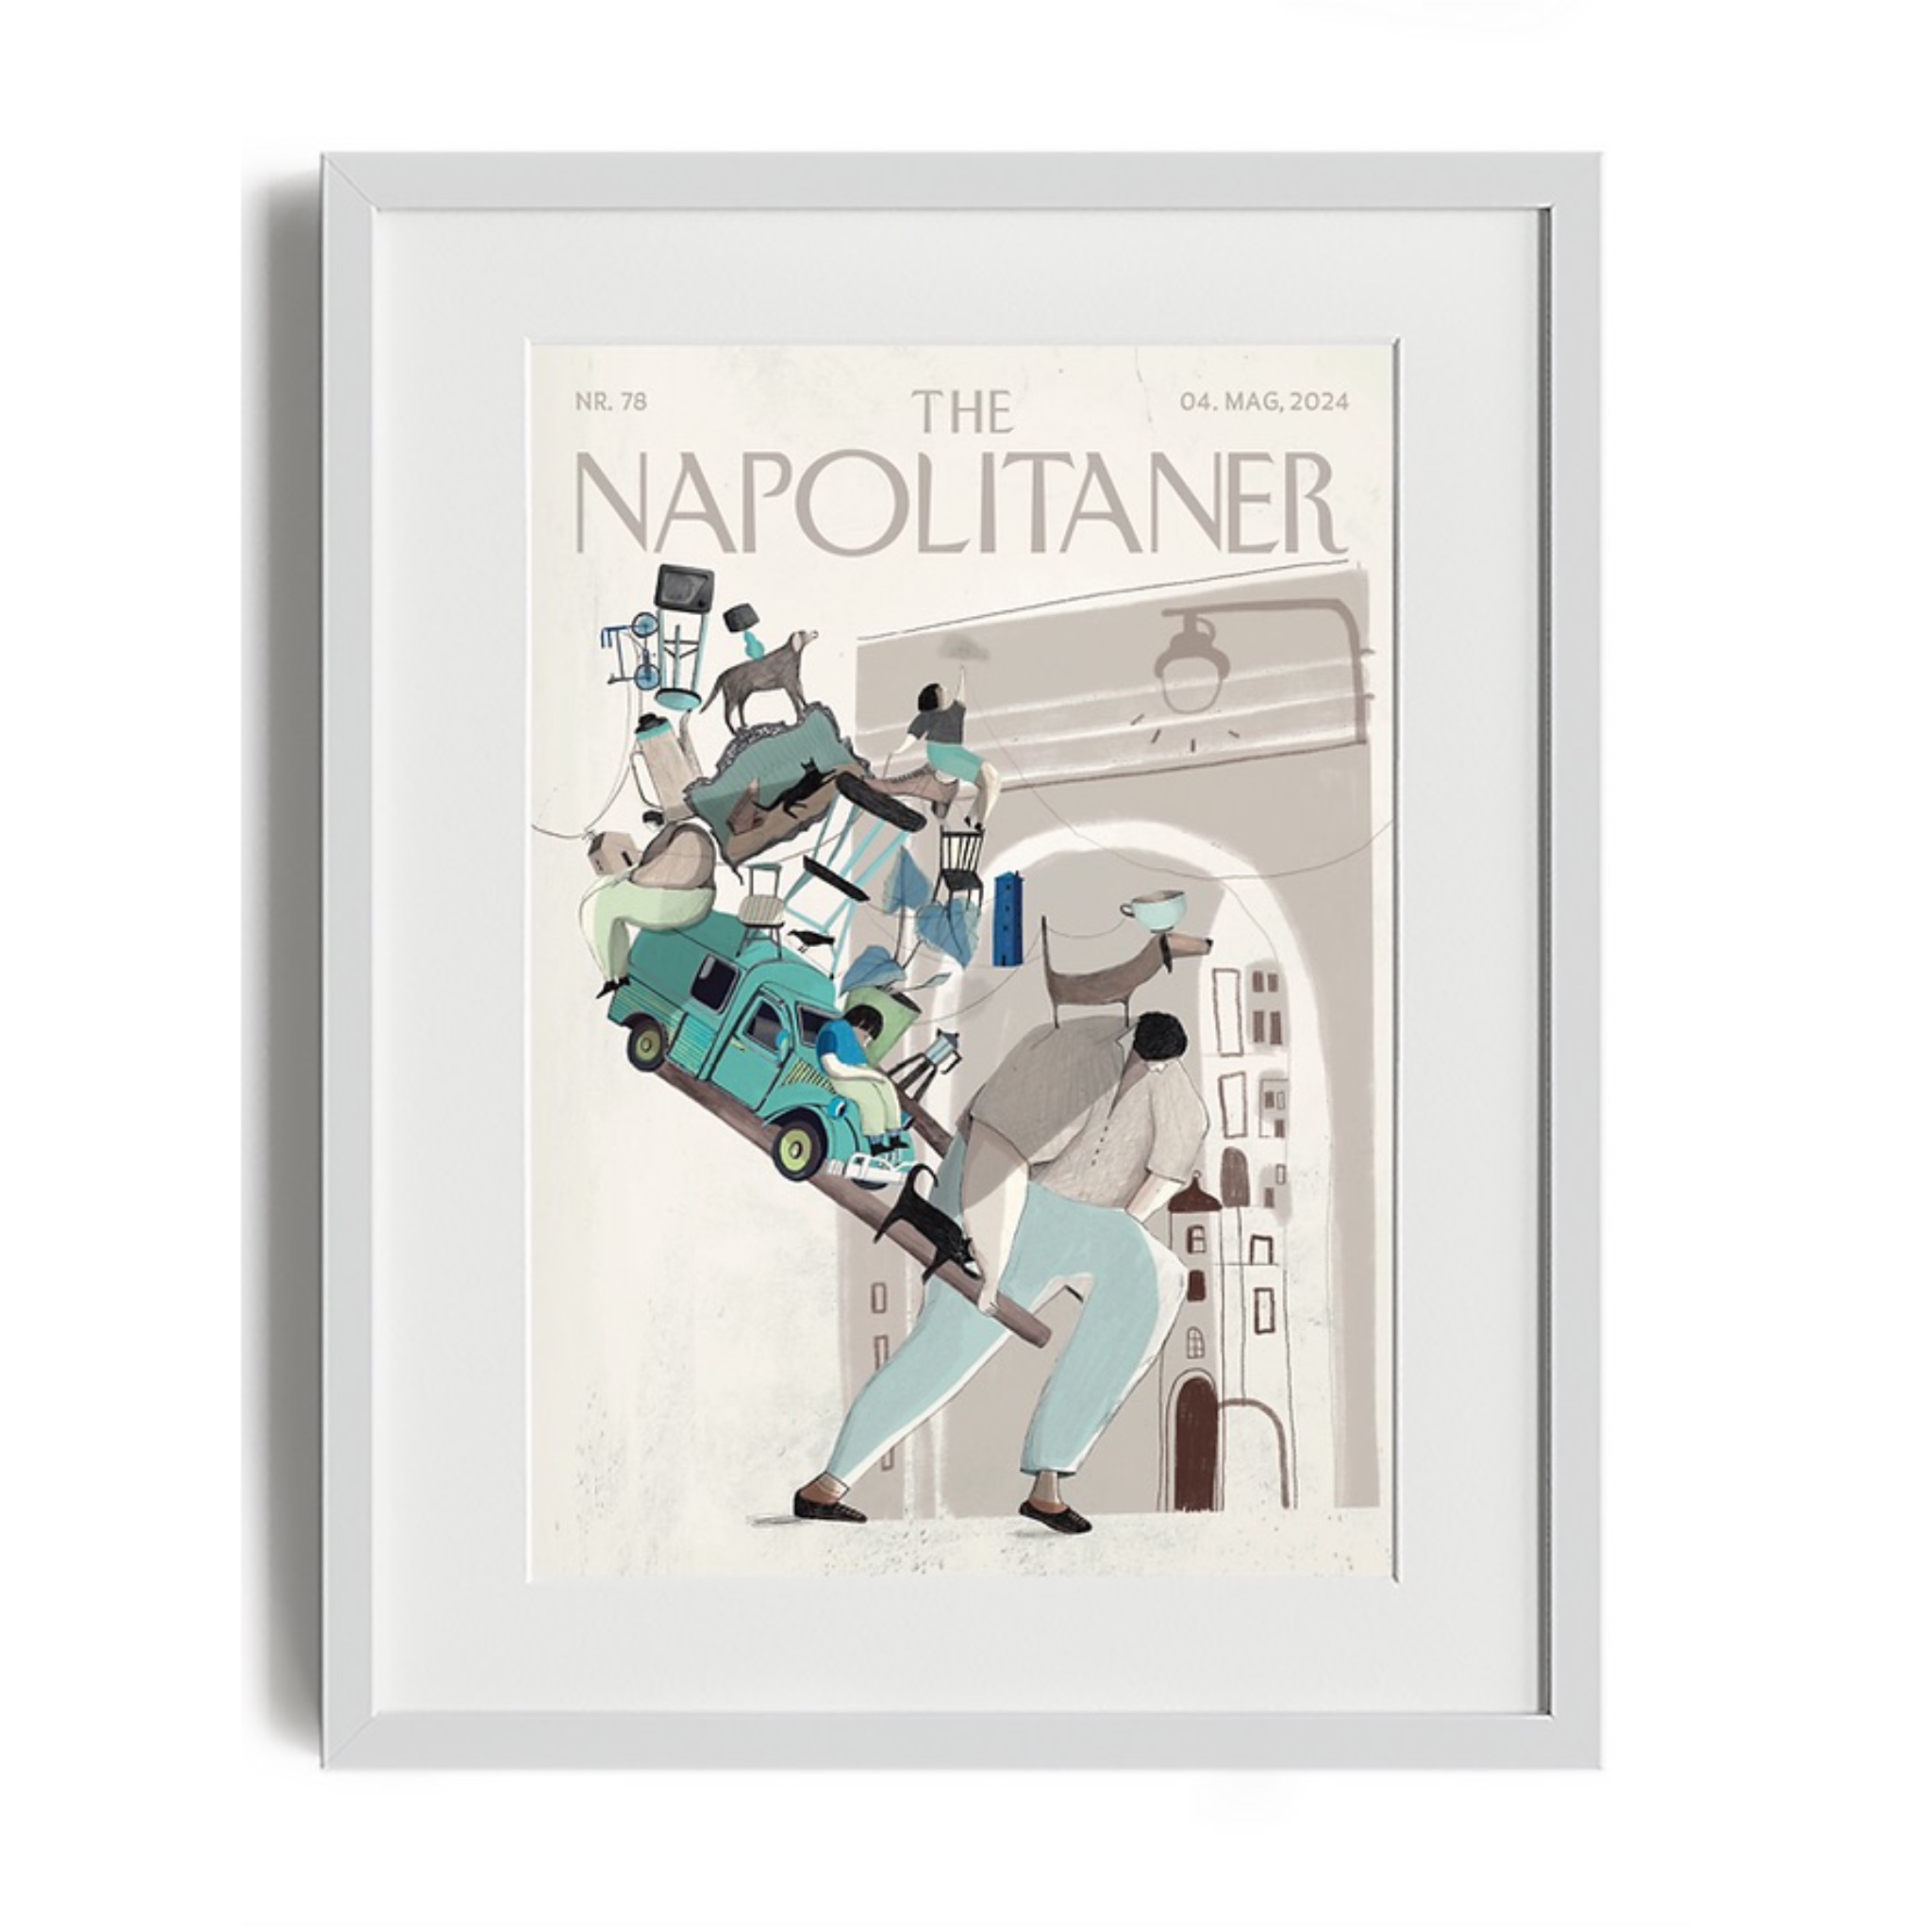 The Napolitaner #78